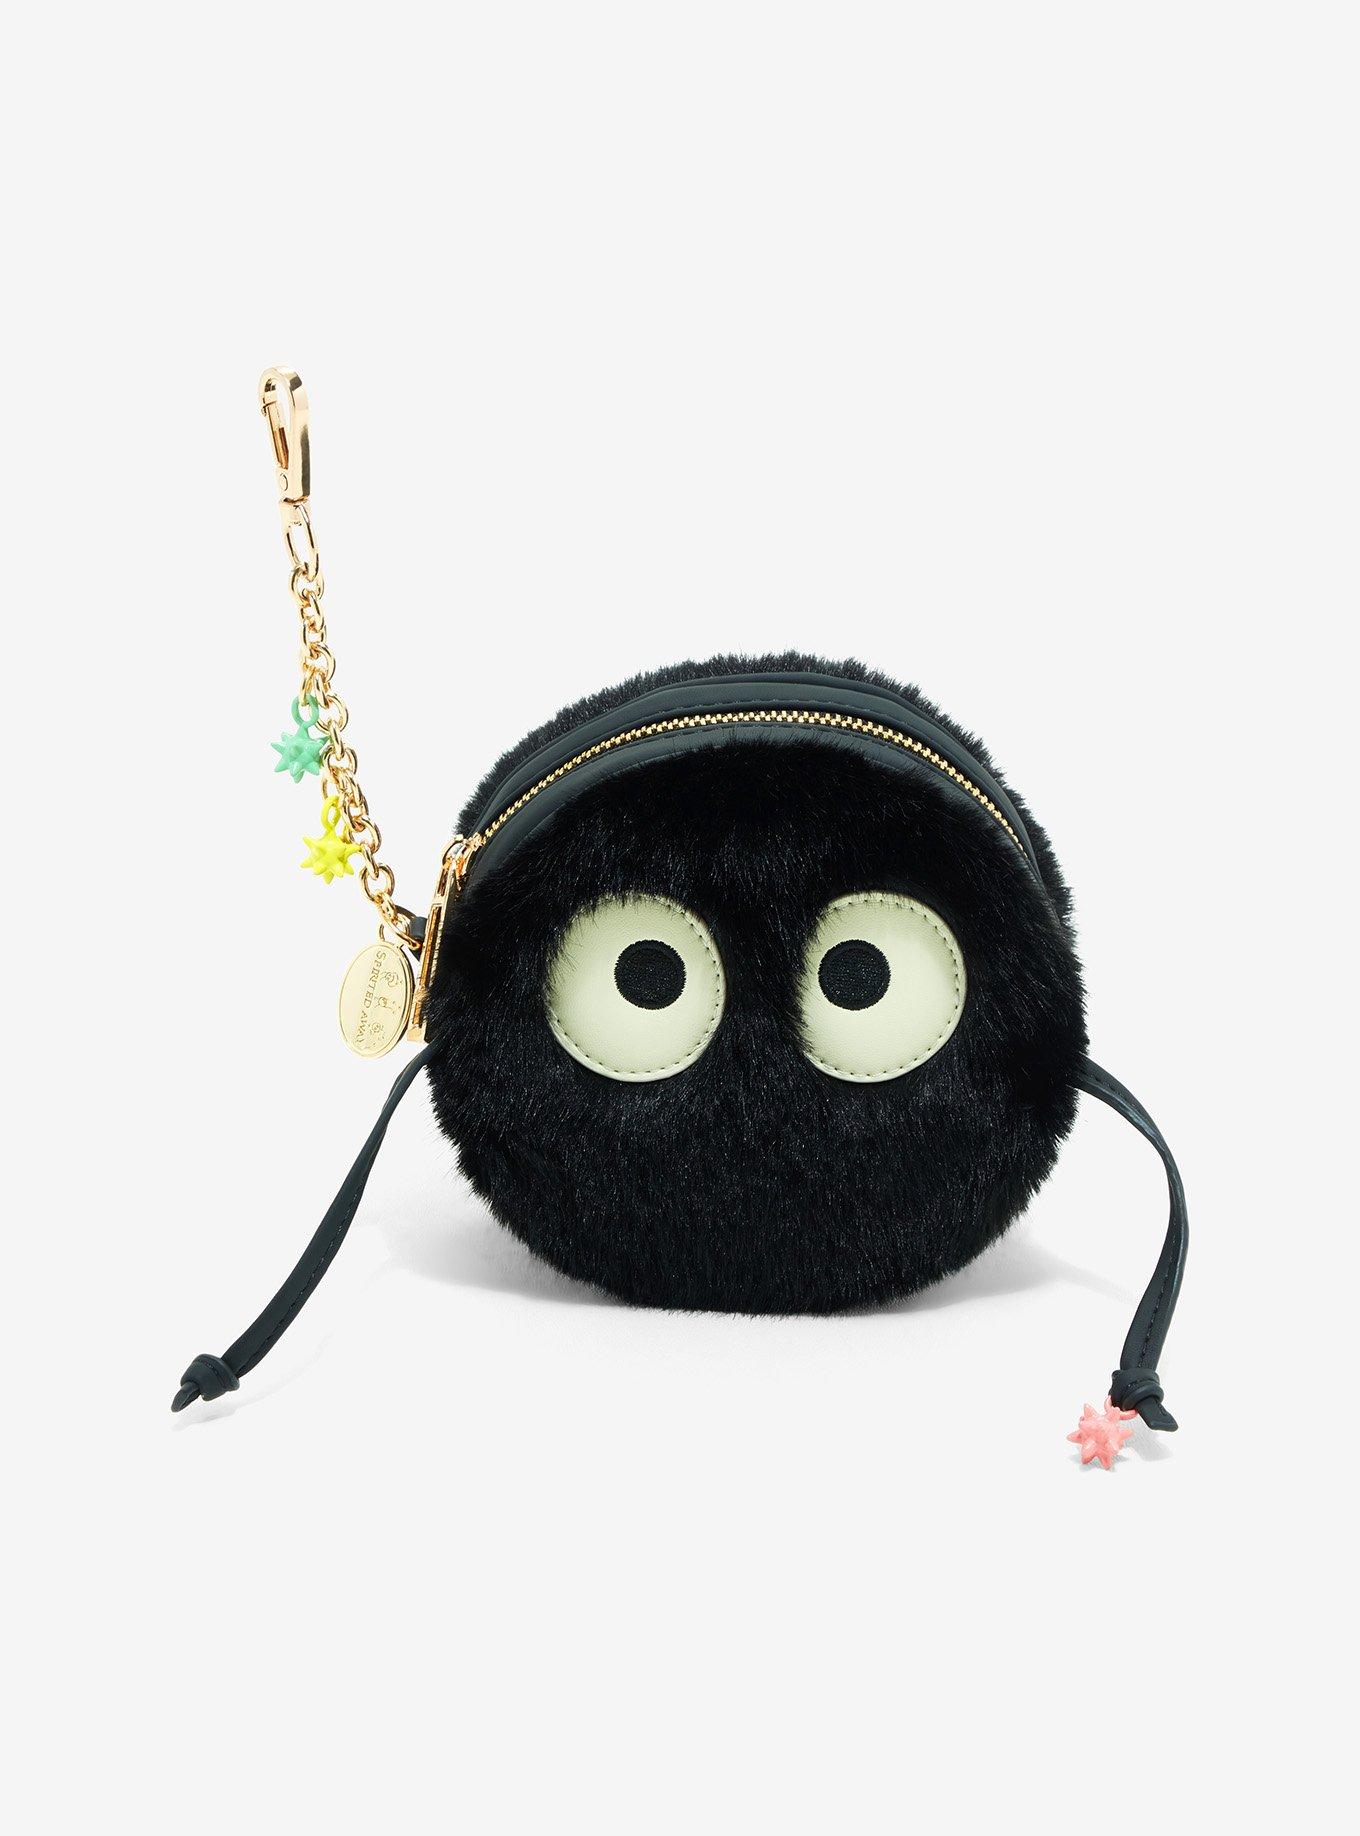 Keychain Owl Bag Pendant Mini Change Purse for Women Girls